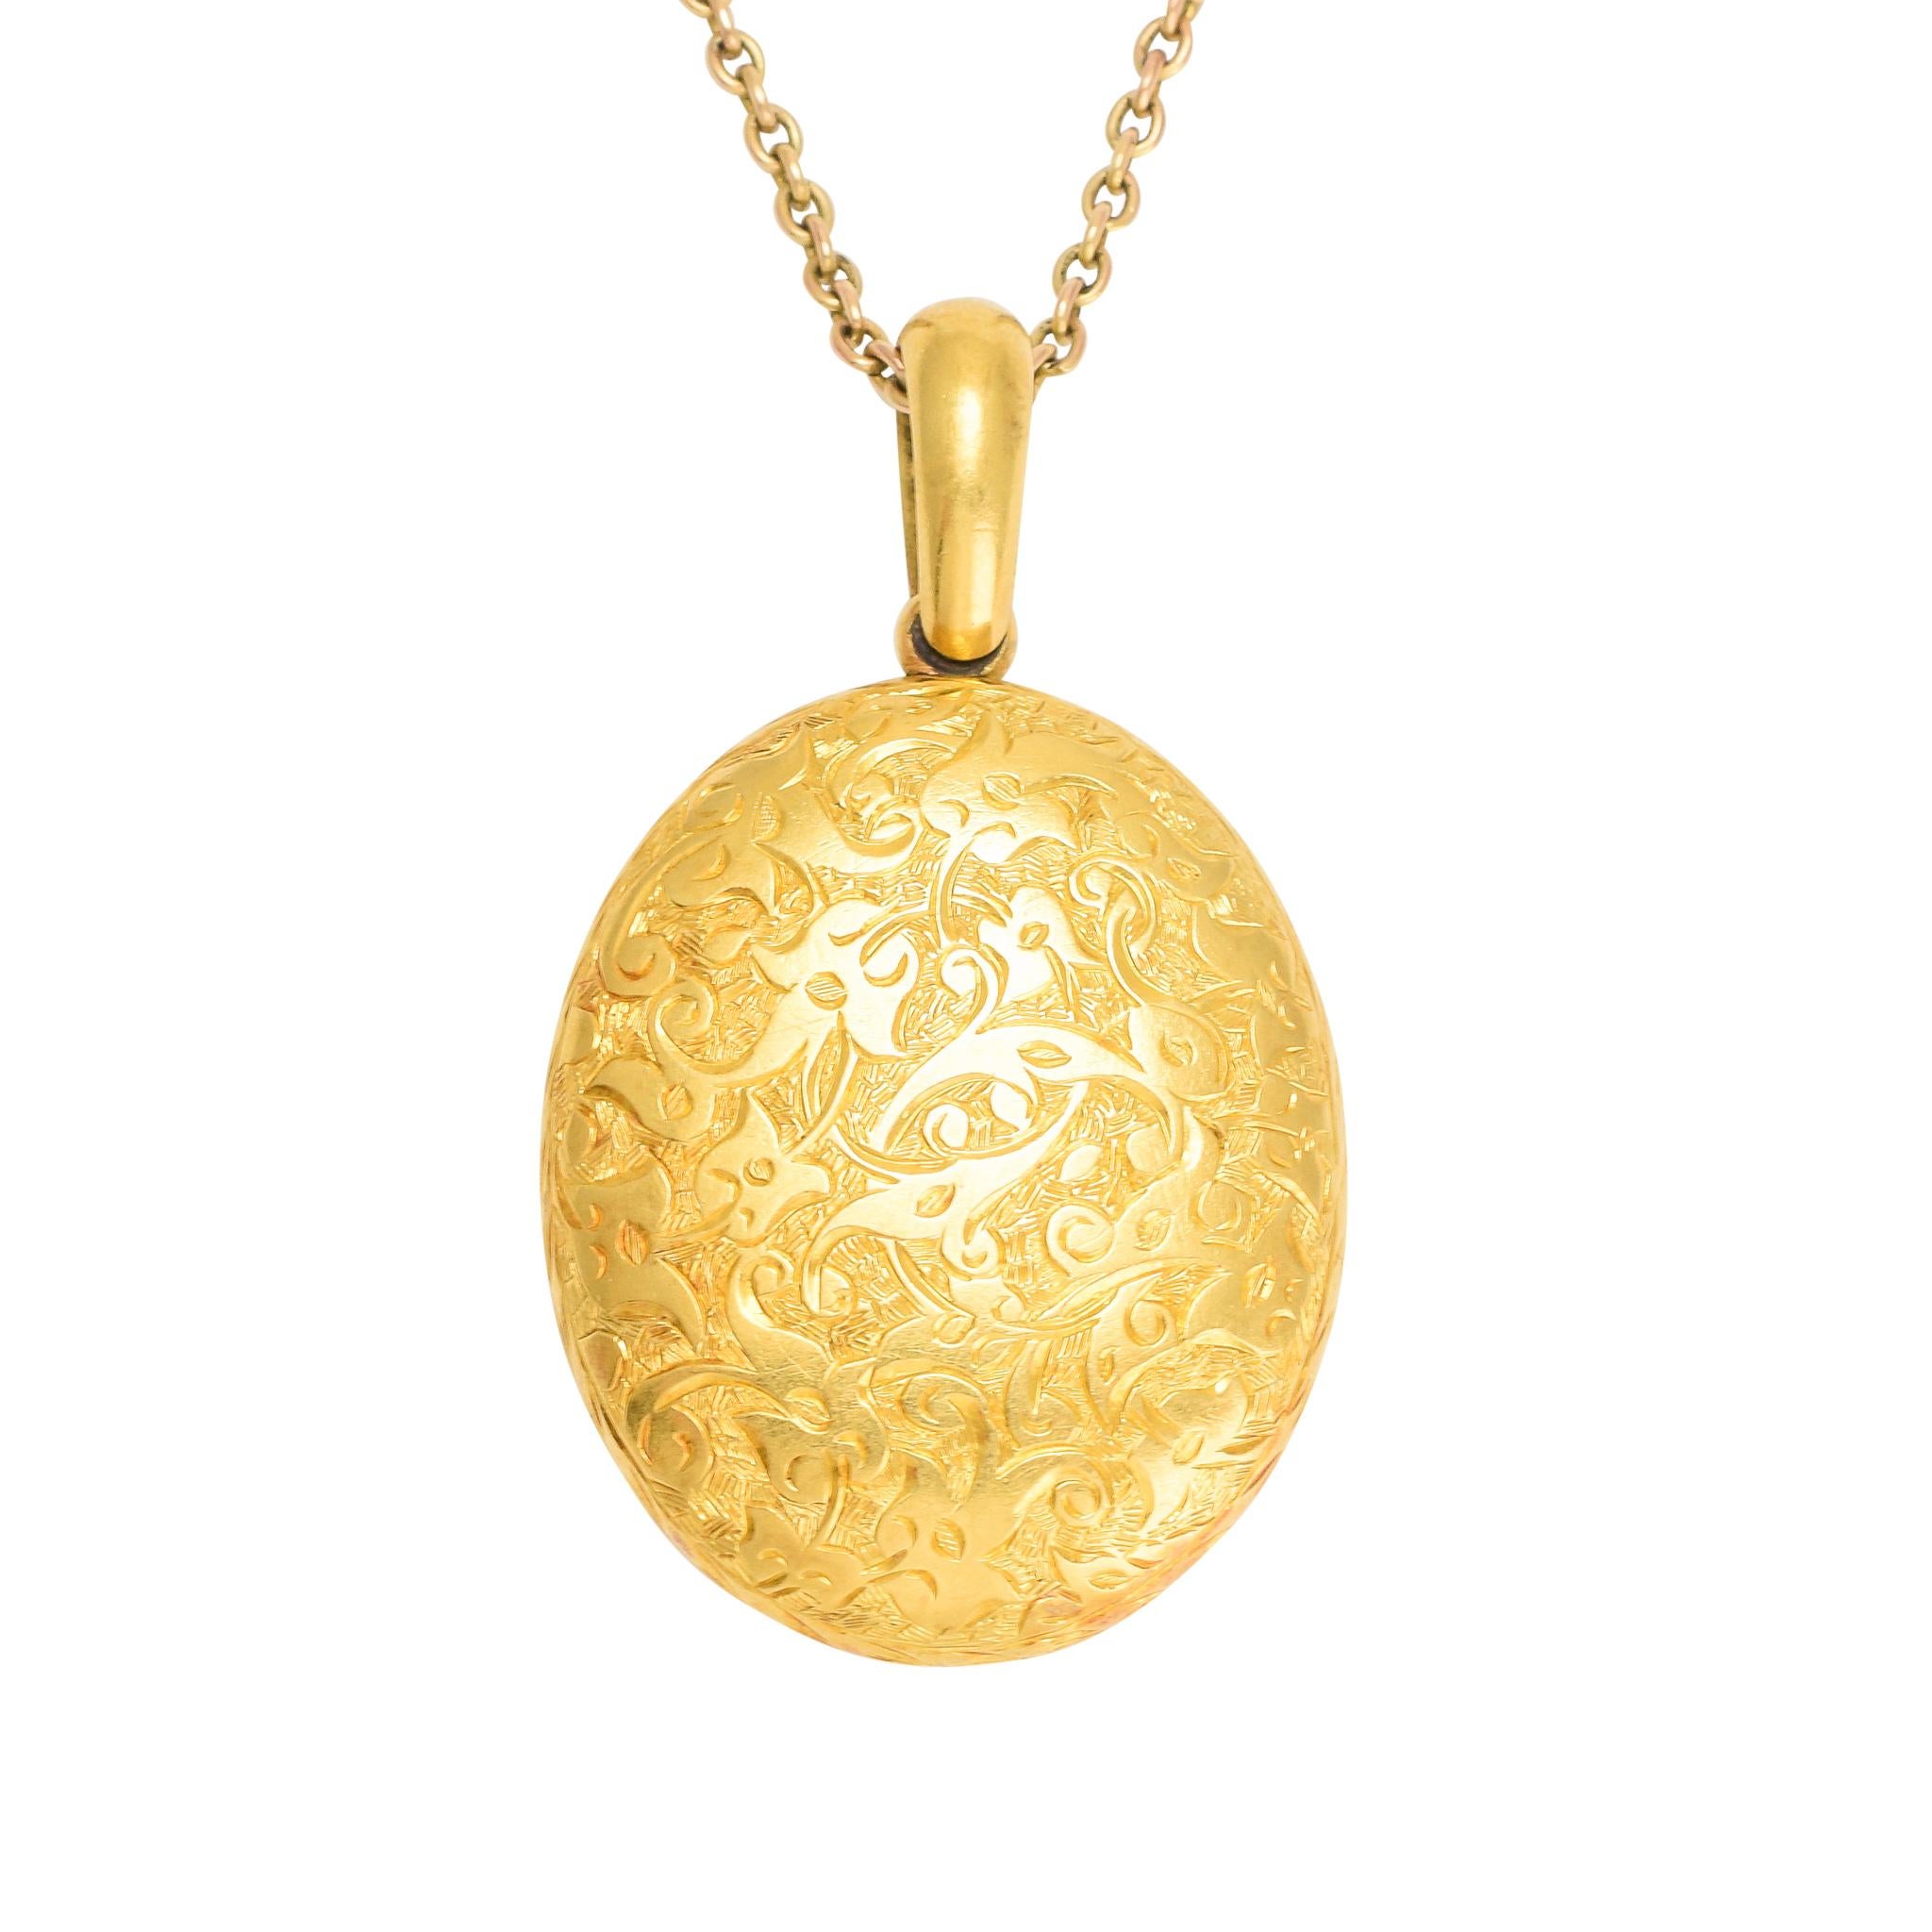 Antique Victorian 15 Karat Gold Foliate Chased Oval Locket Necklace